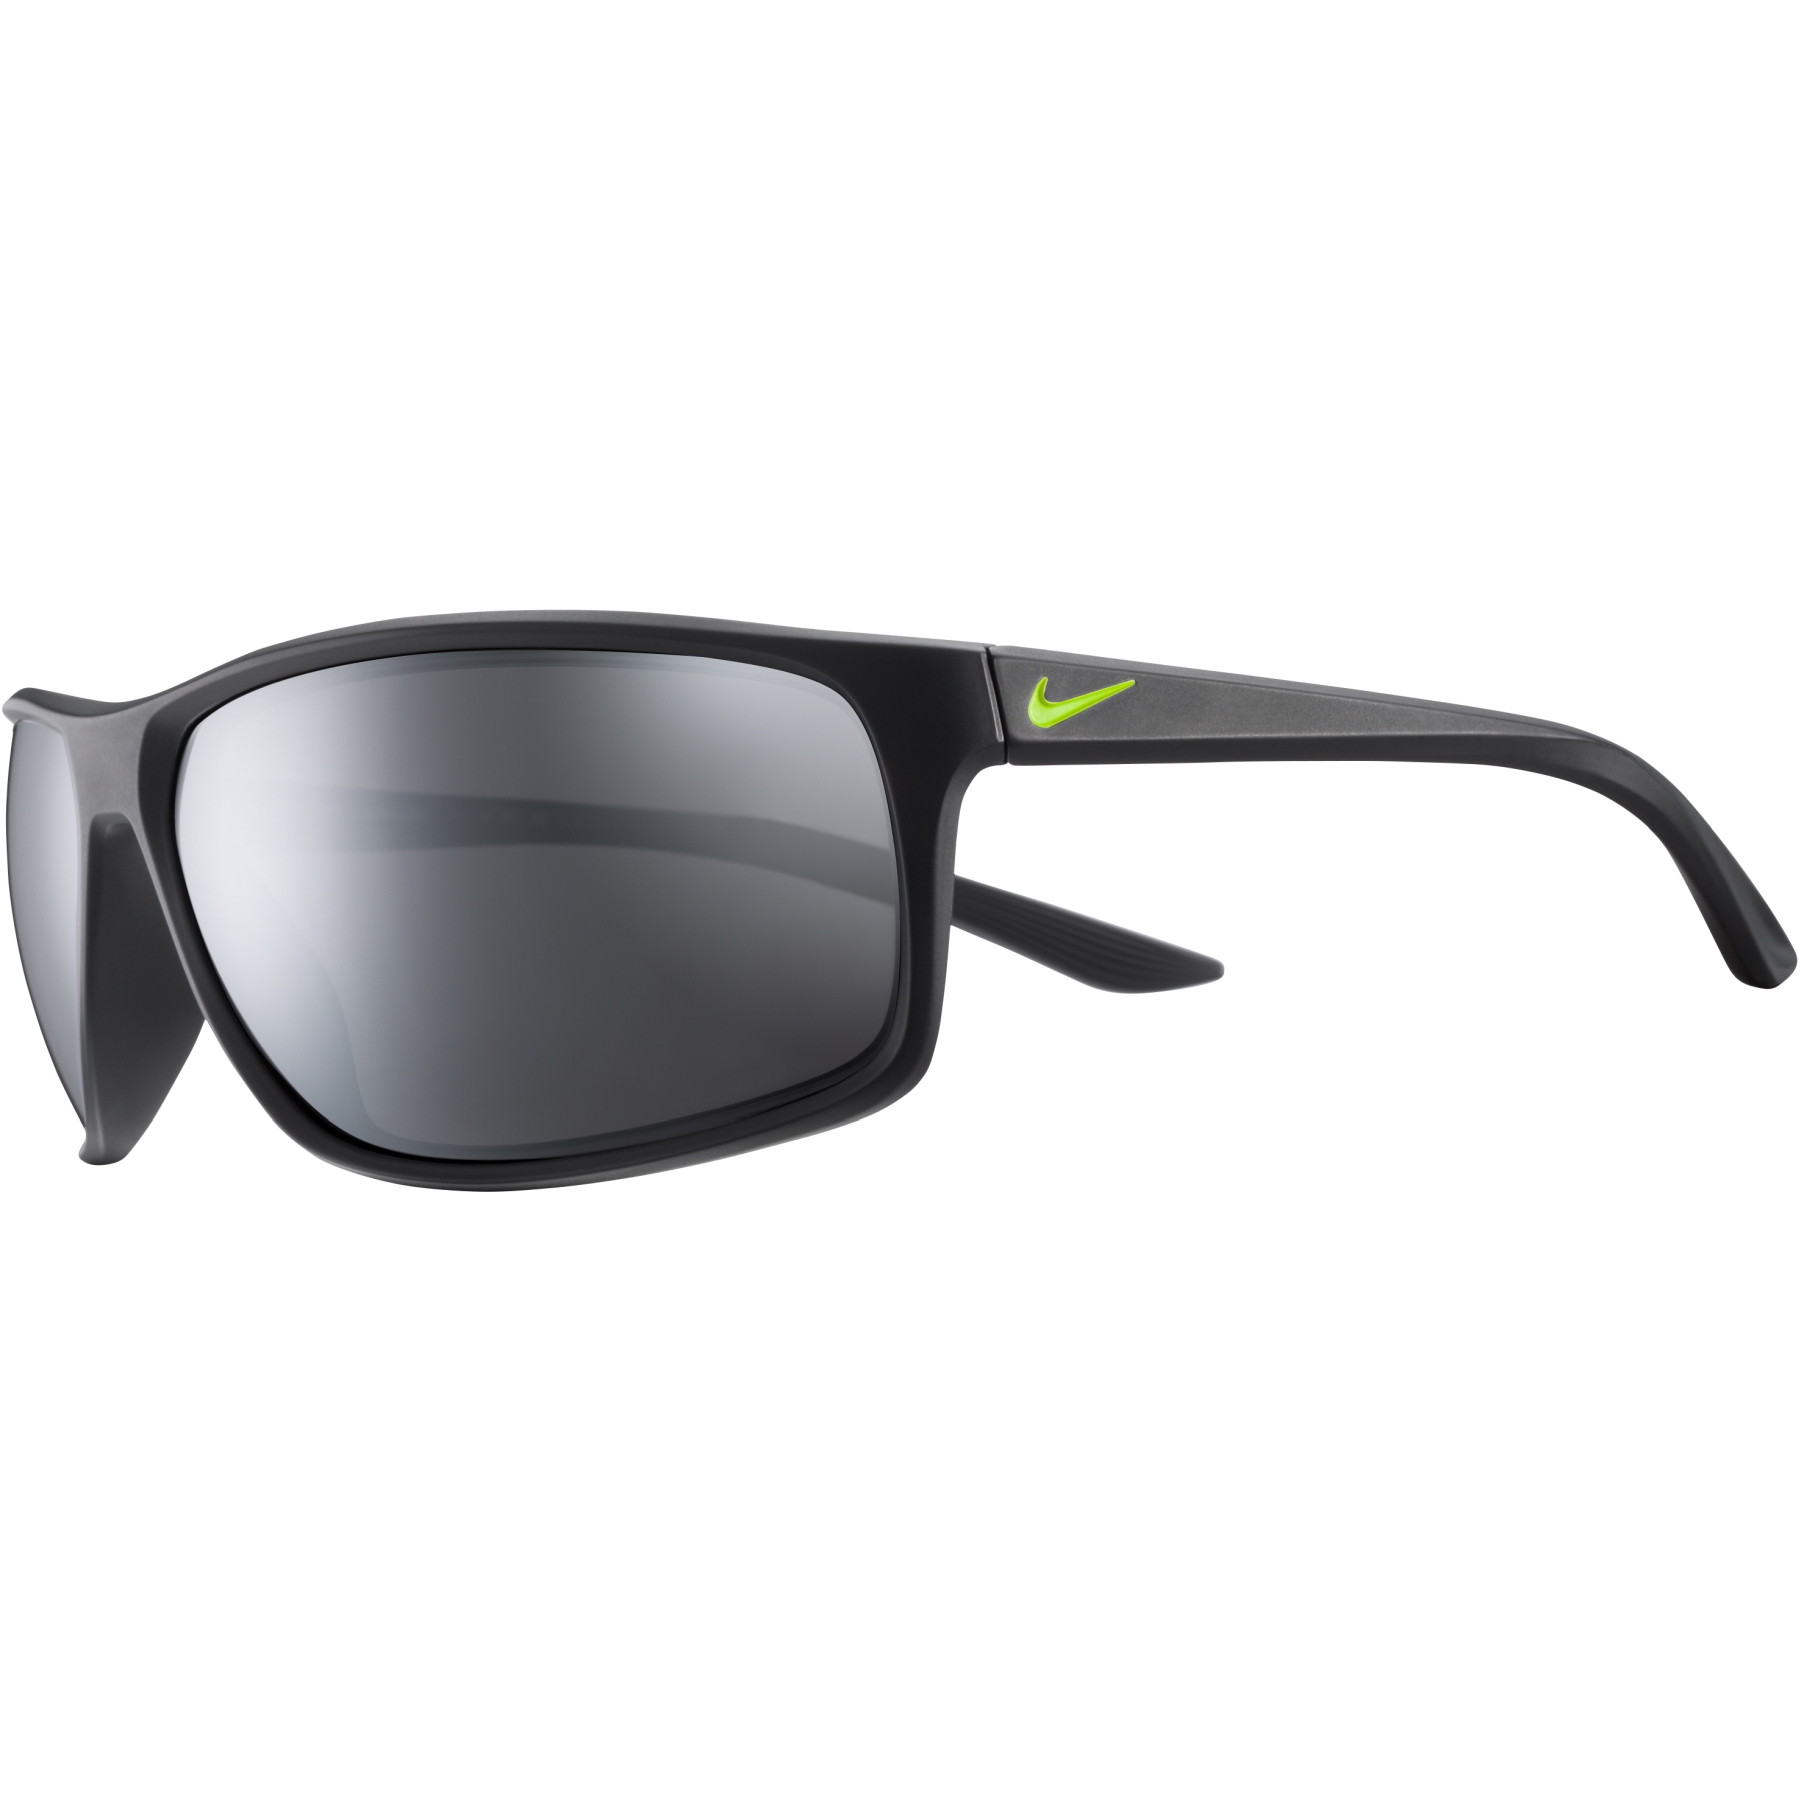 Picture of Nike Adrenaline Sunglasses - matte black/volt | grey w/ silver mirror lens 6615007